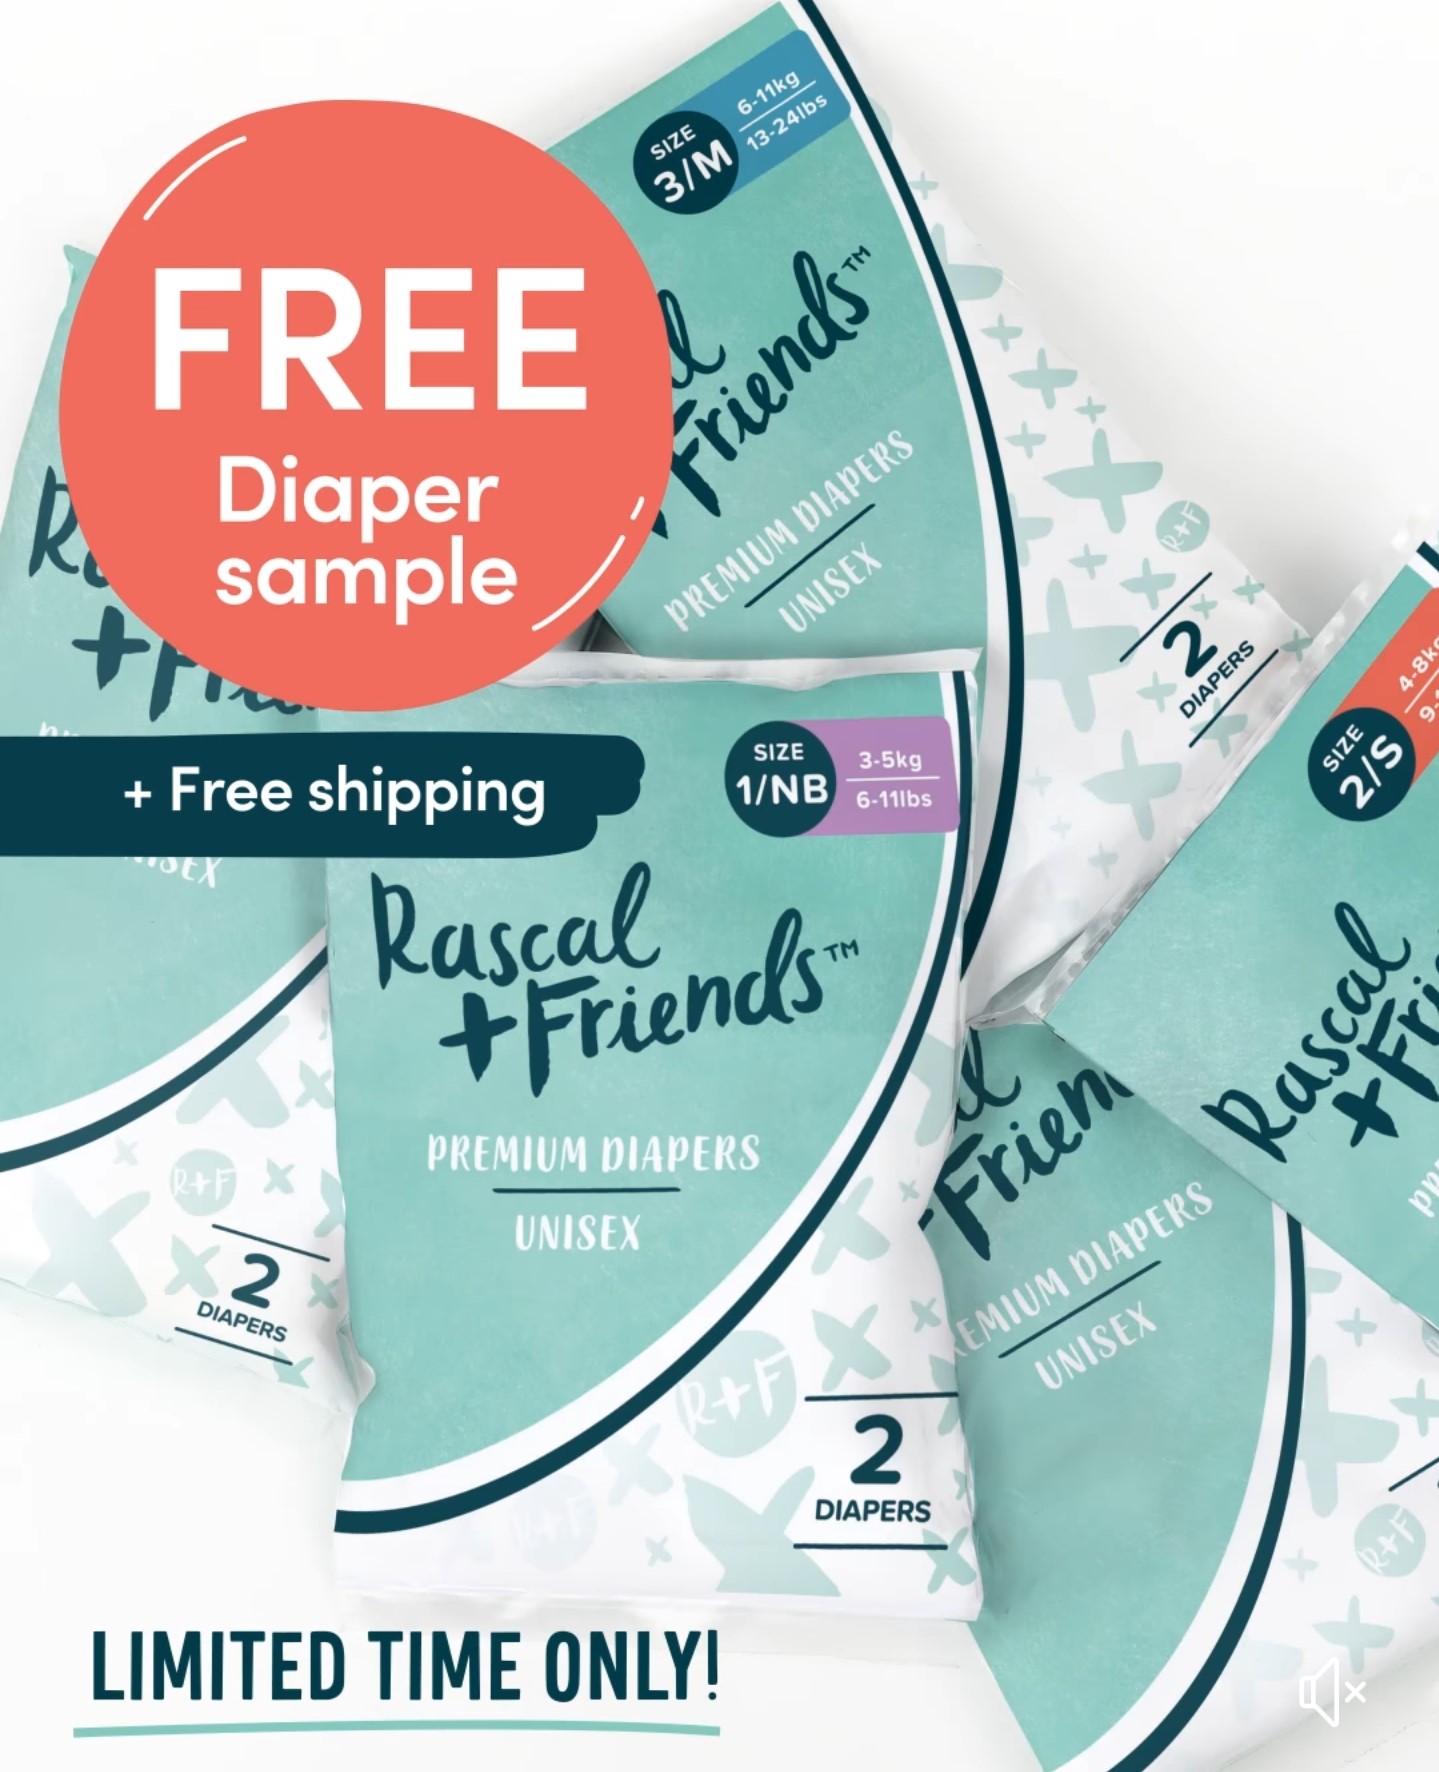 Free Sample of Rascal + Friends Diaper